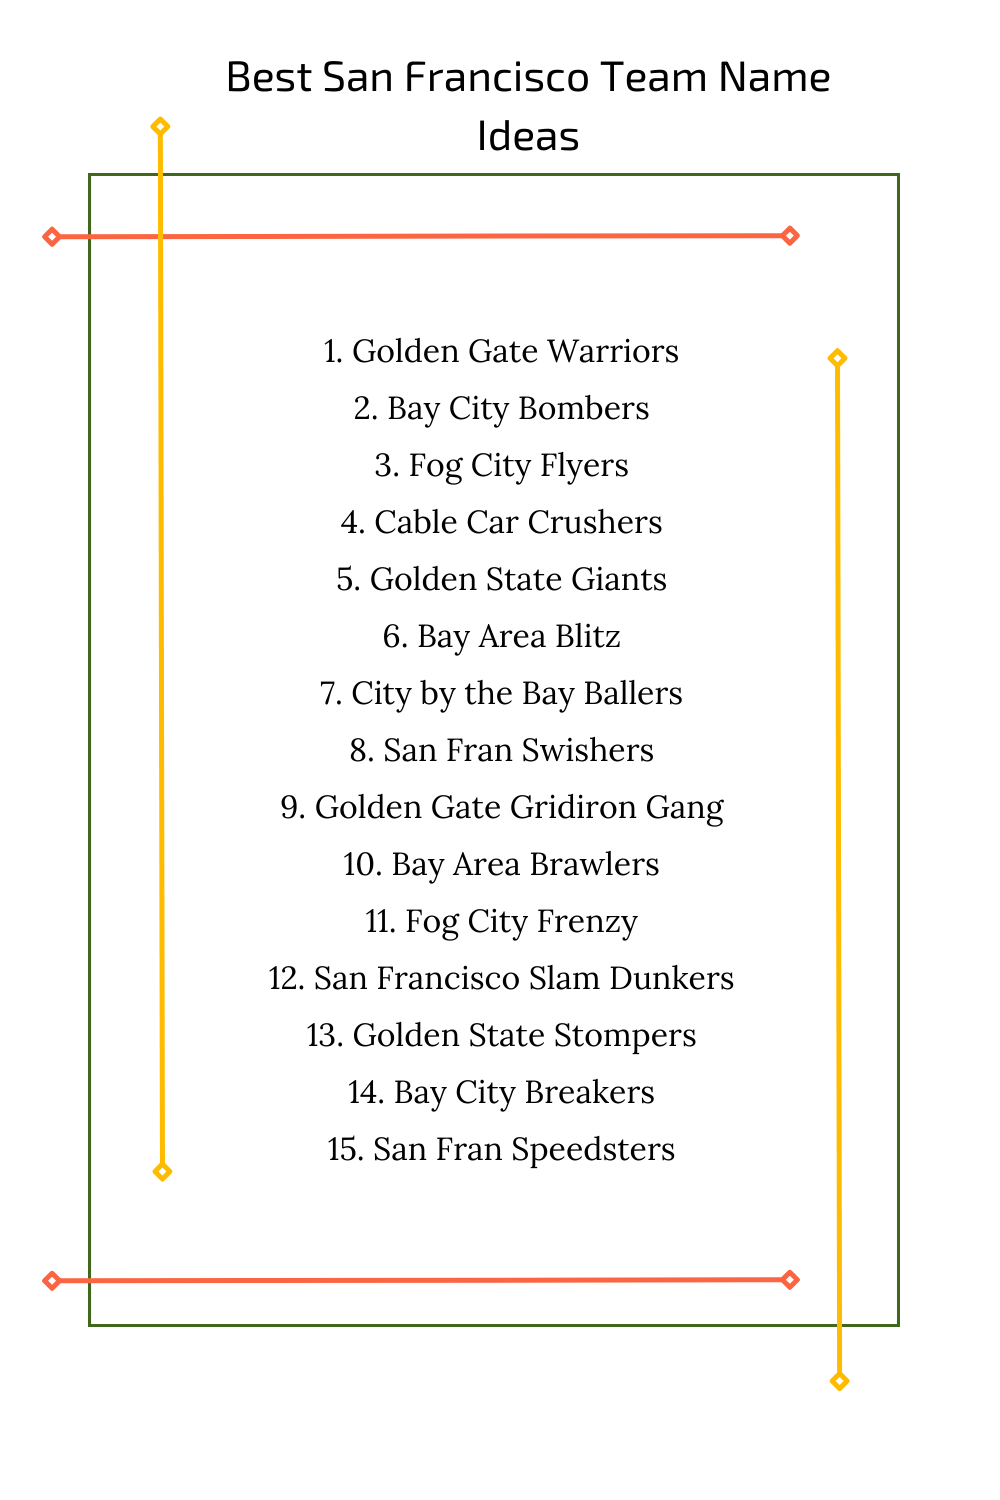 Best San Francisco Team Name Ideas